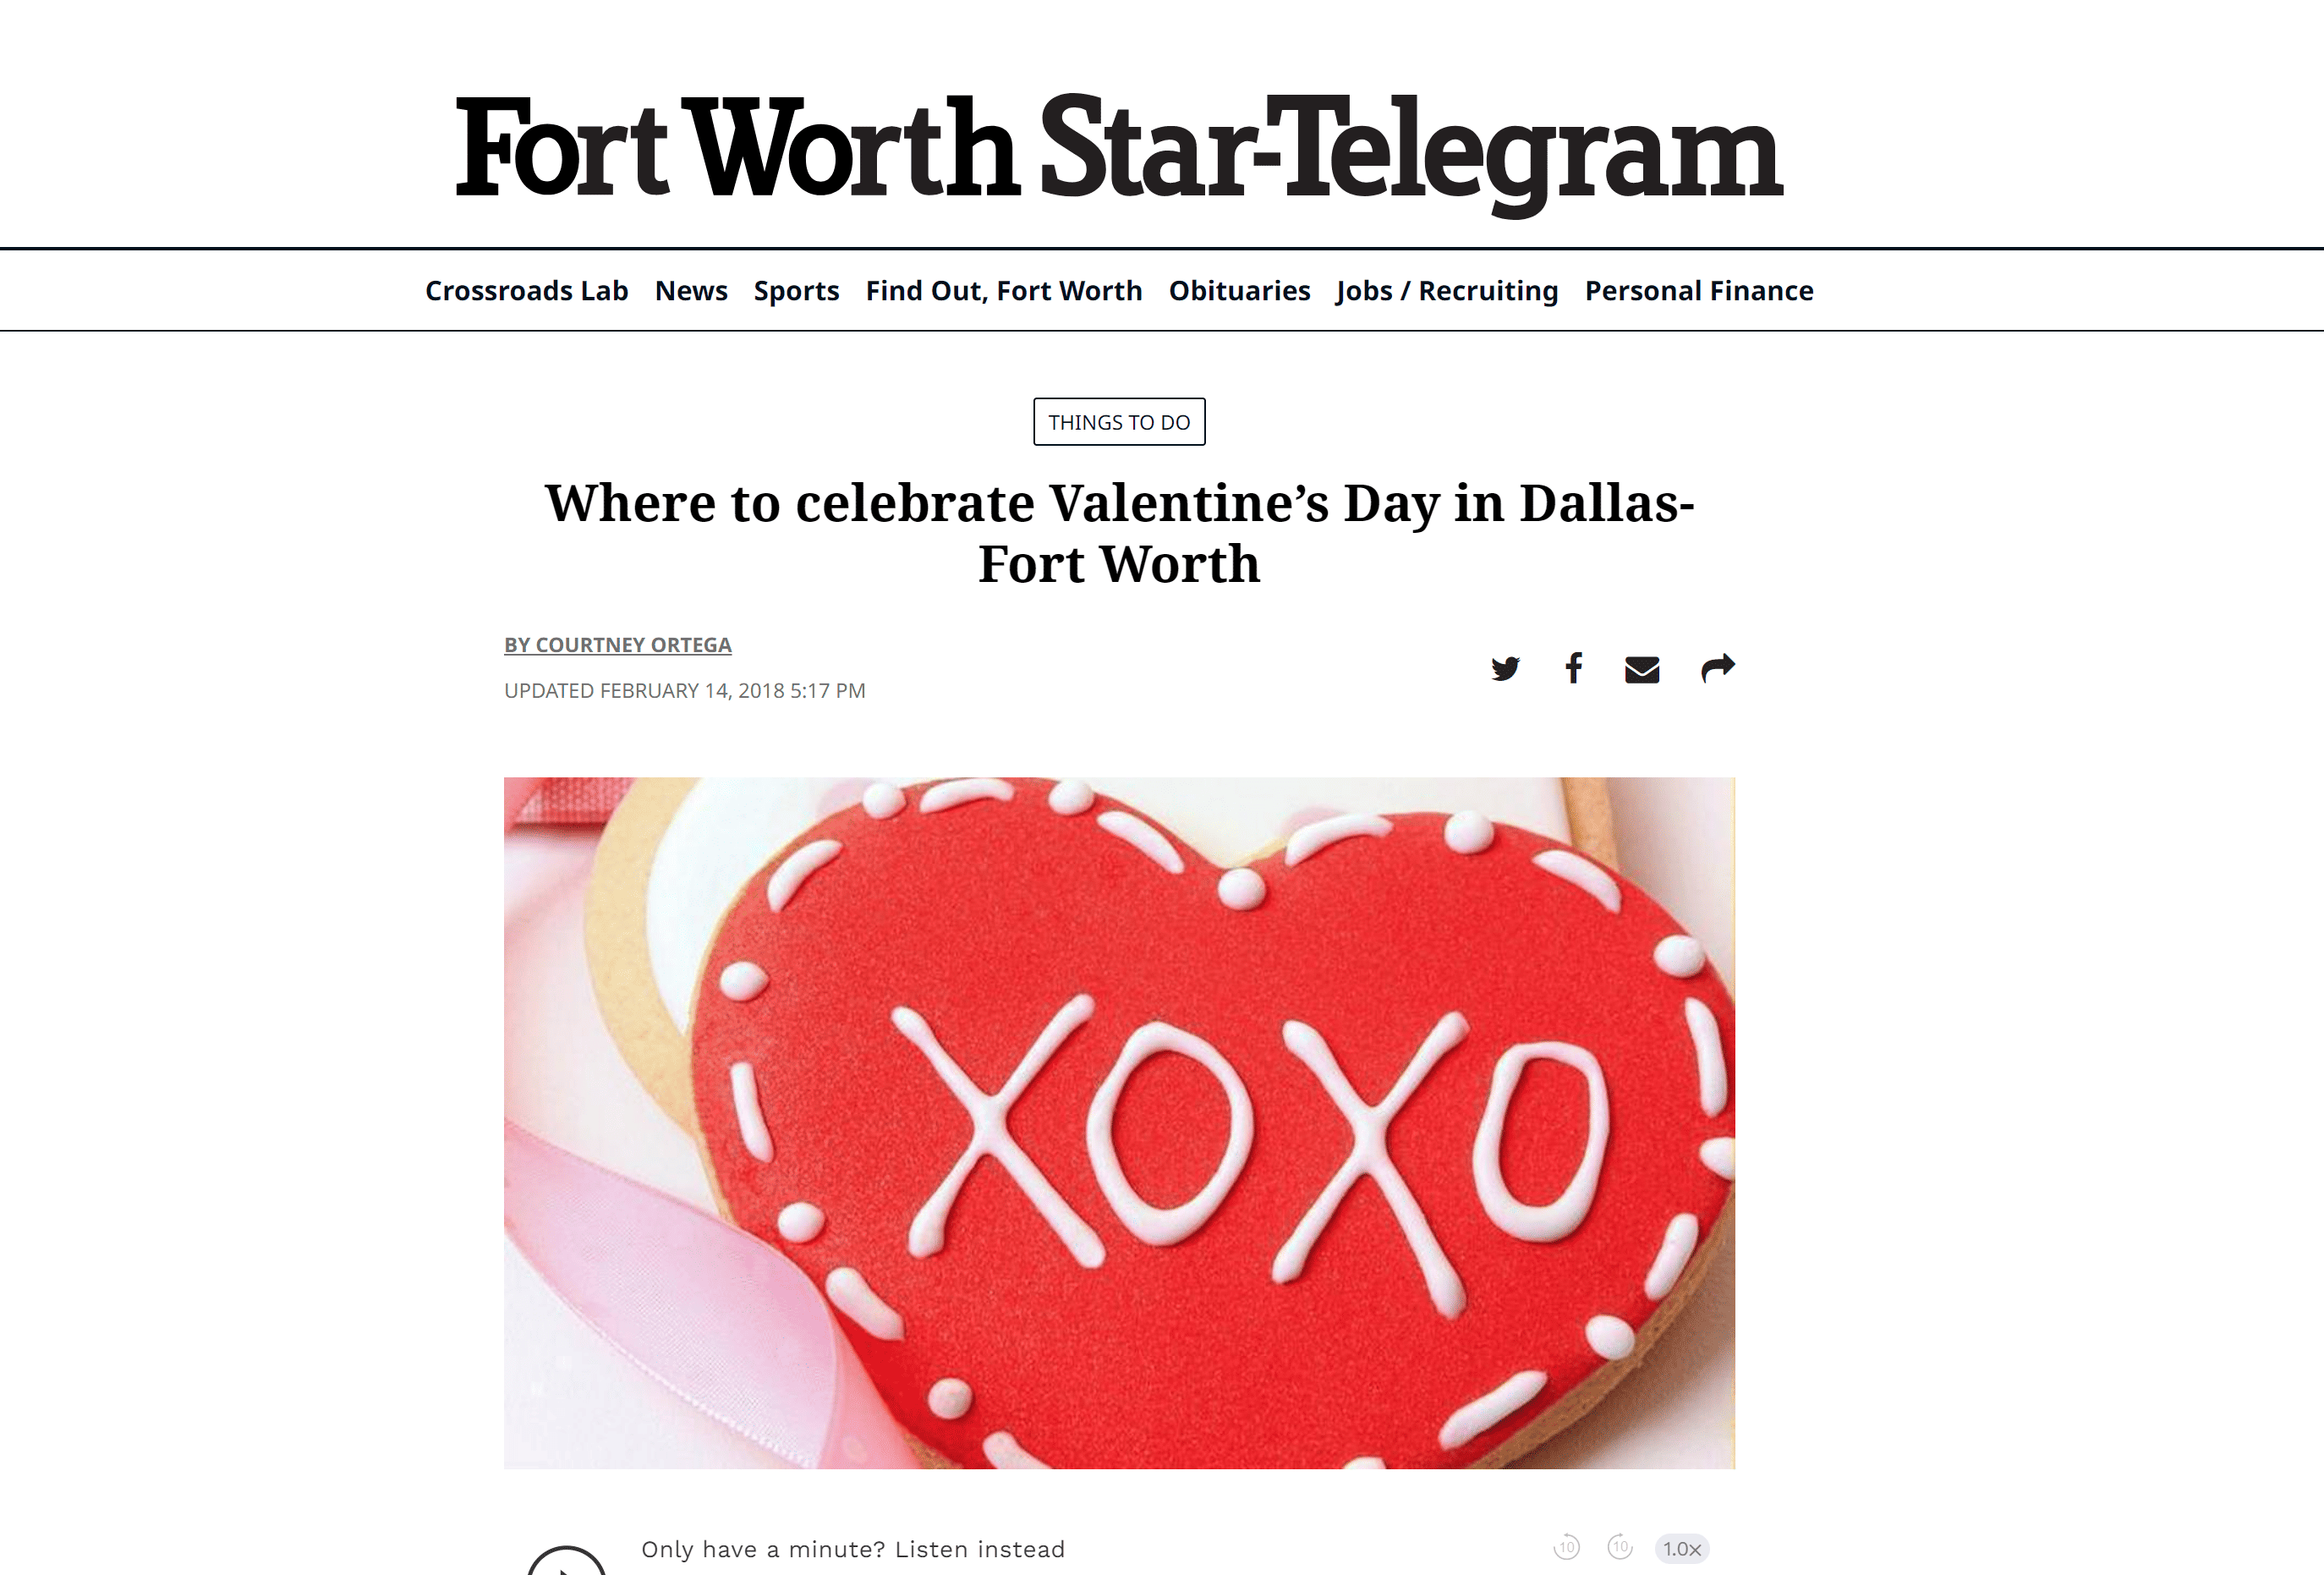 Where to Celebrate Valentine's Day in Fort Worth Star-Telegram